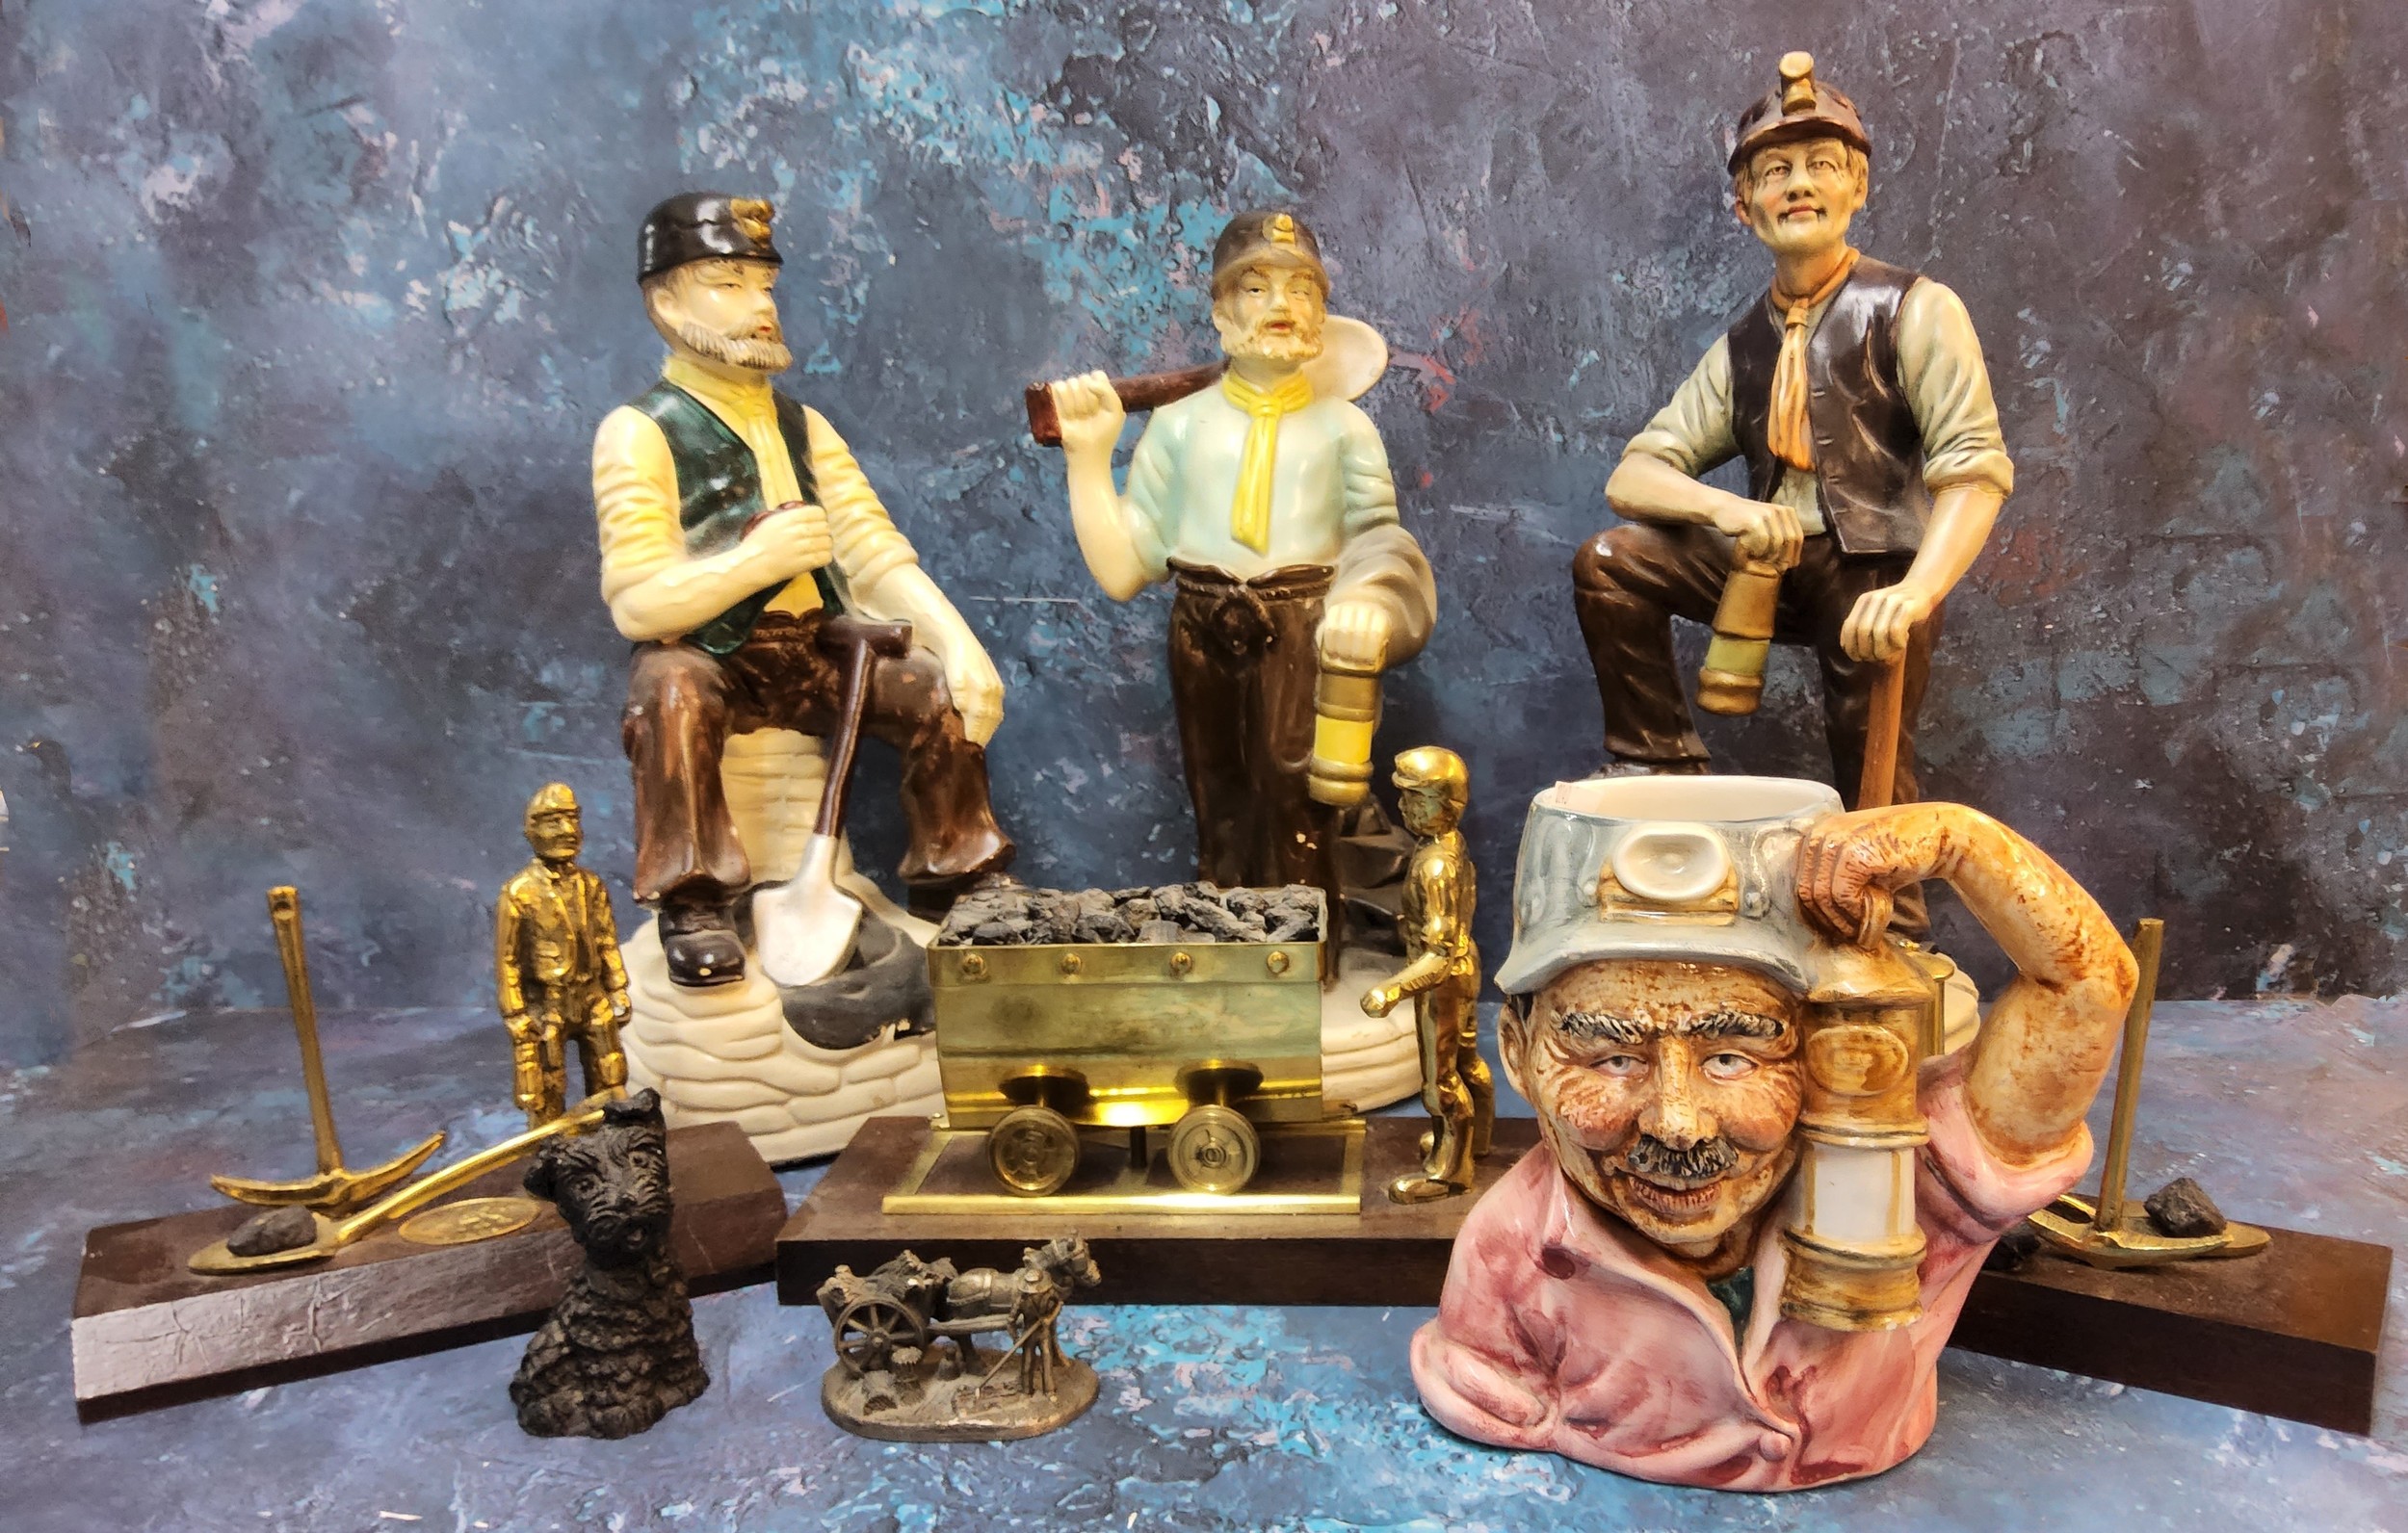 Cymru Welsh Mining Memorabilia - brass and coal models;  a coal model of terrier;  pottery models of